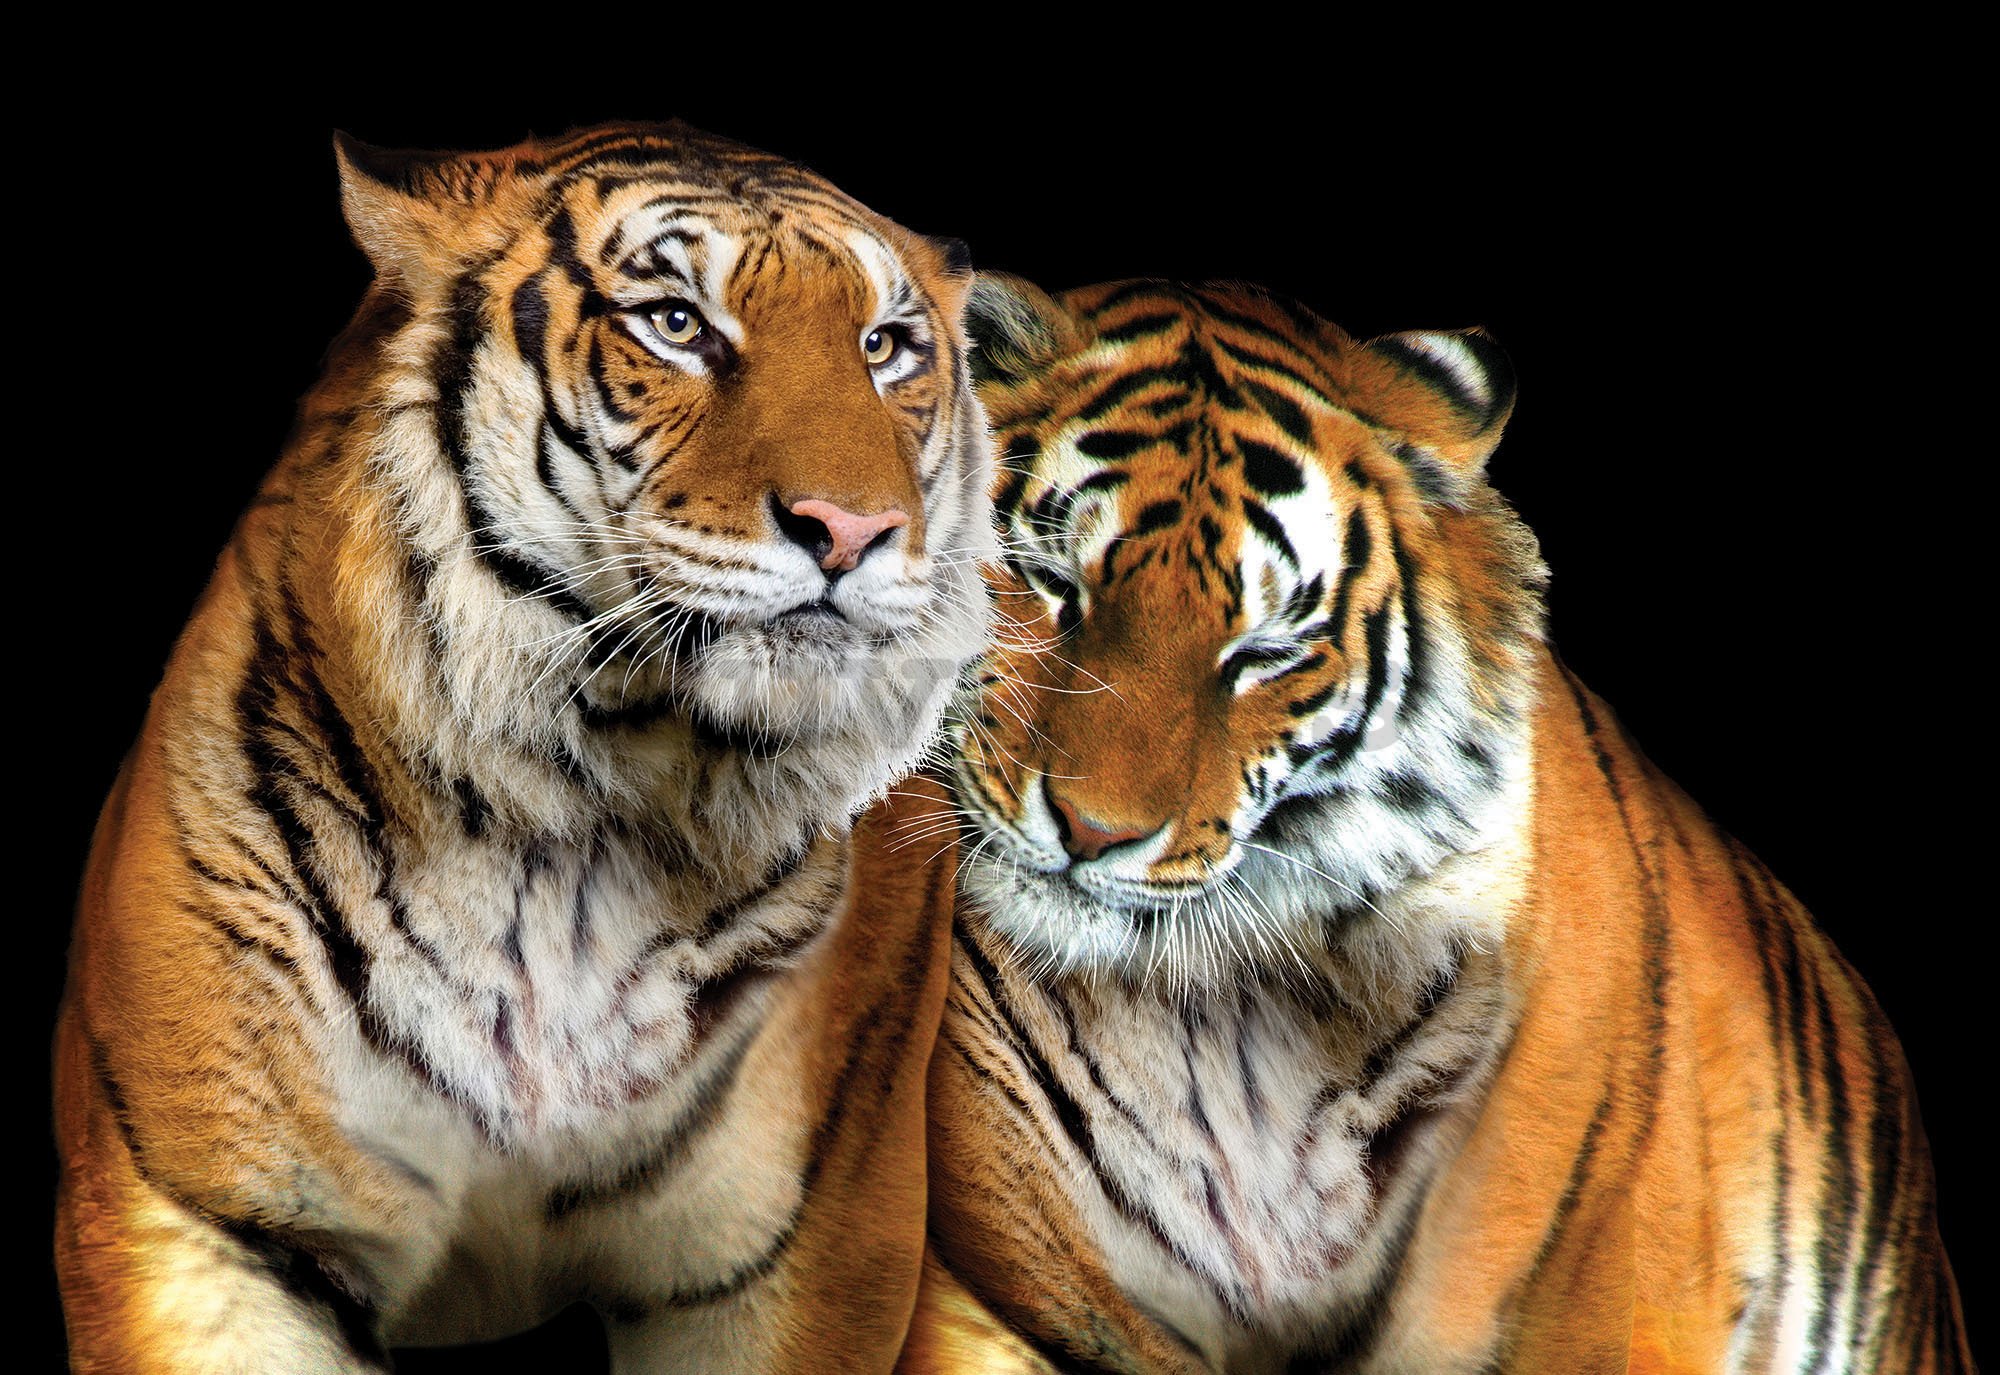 Fotomural: Dos tigres - 254x368 cm